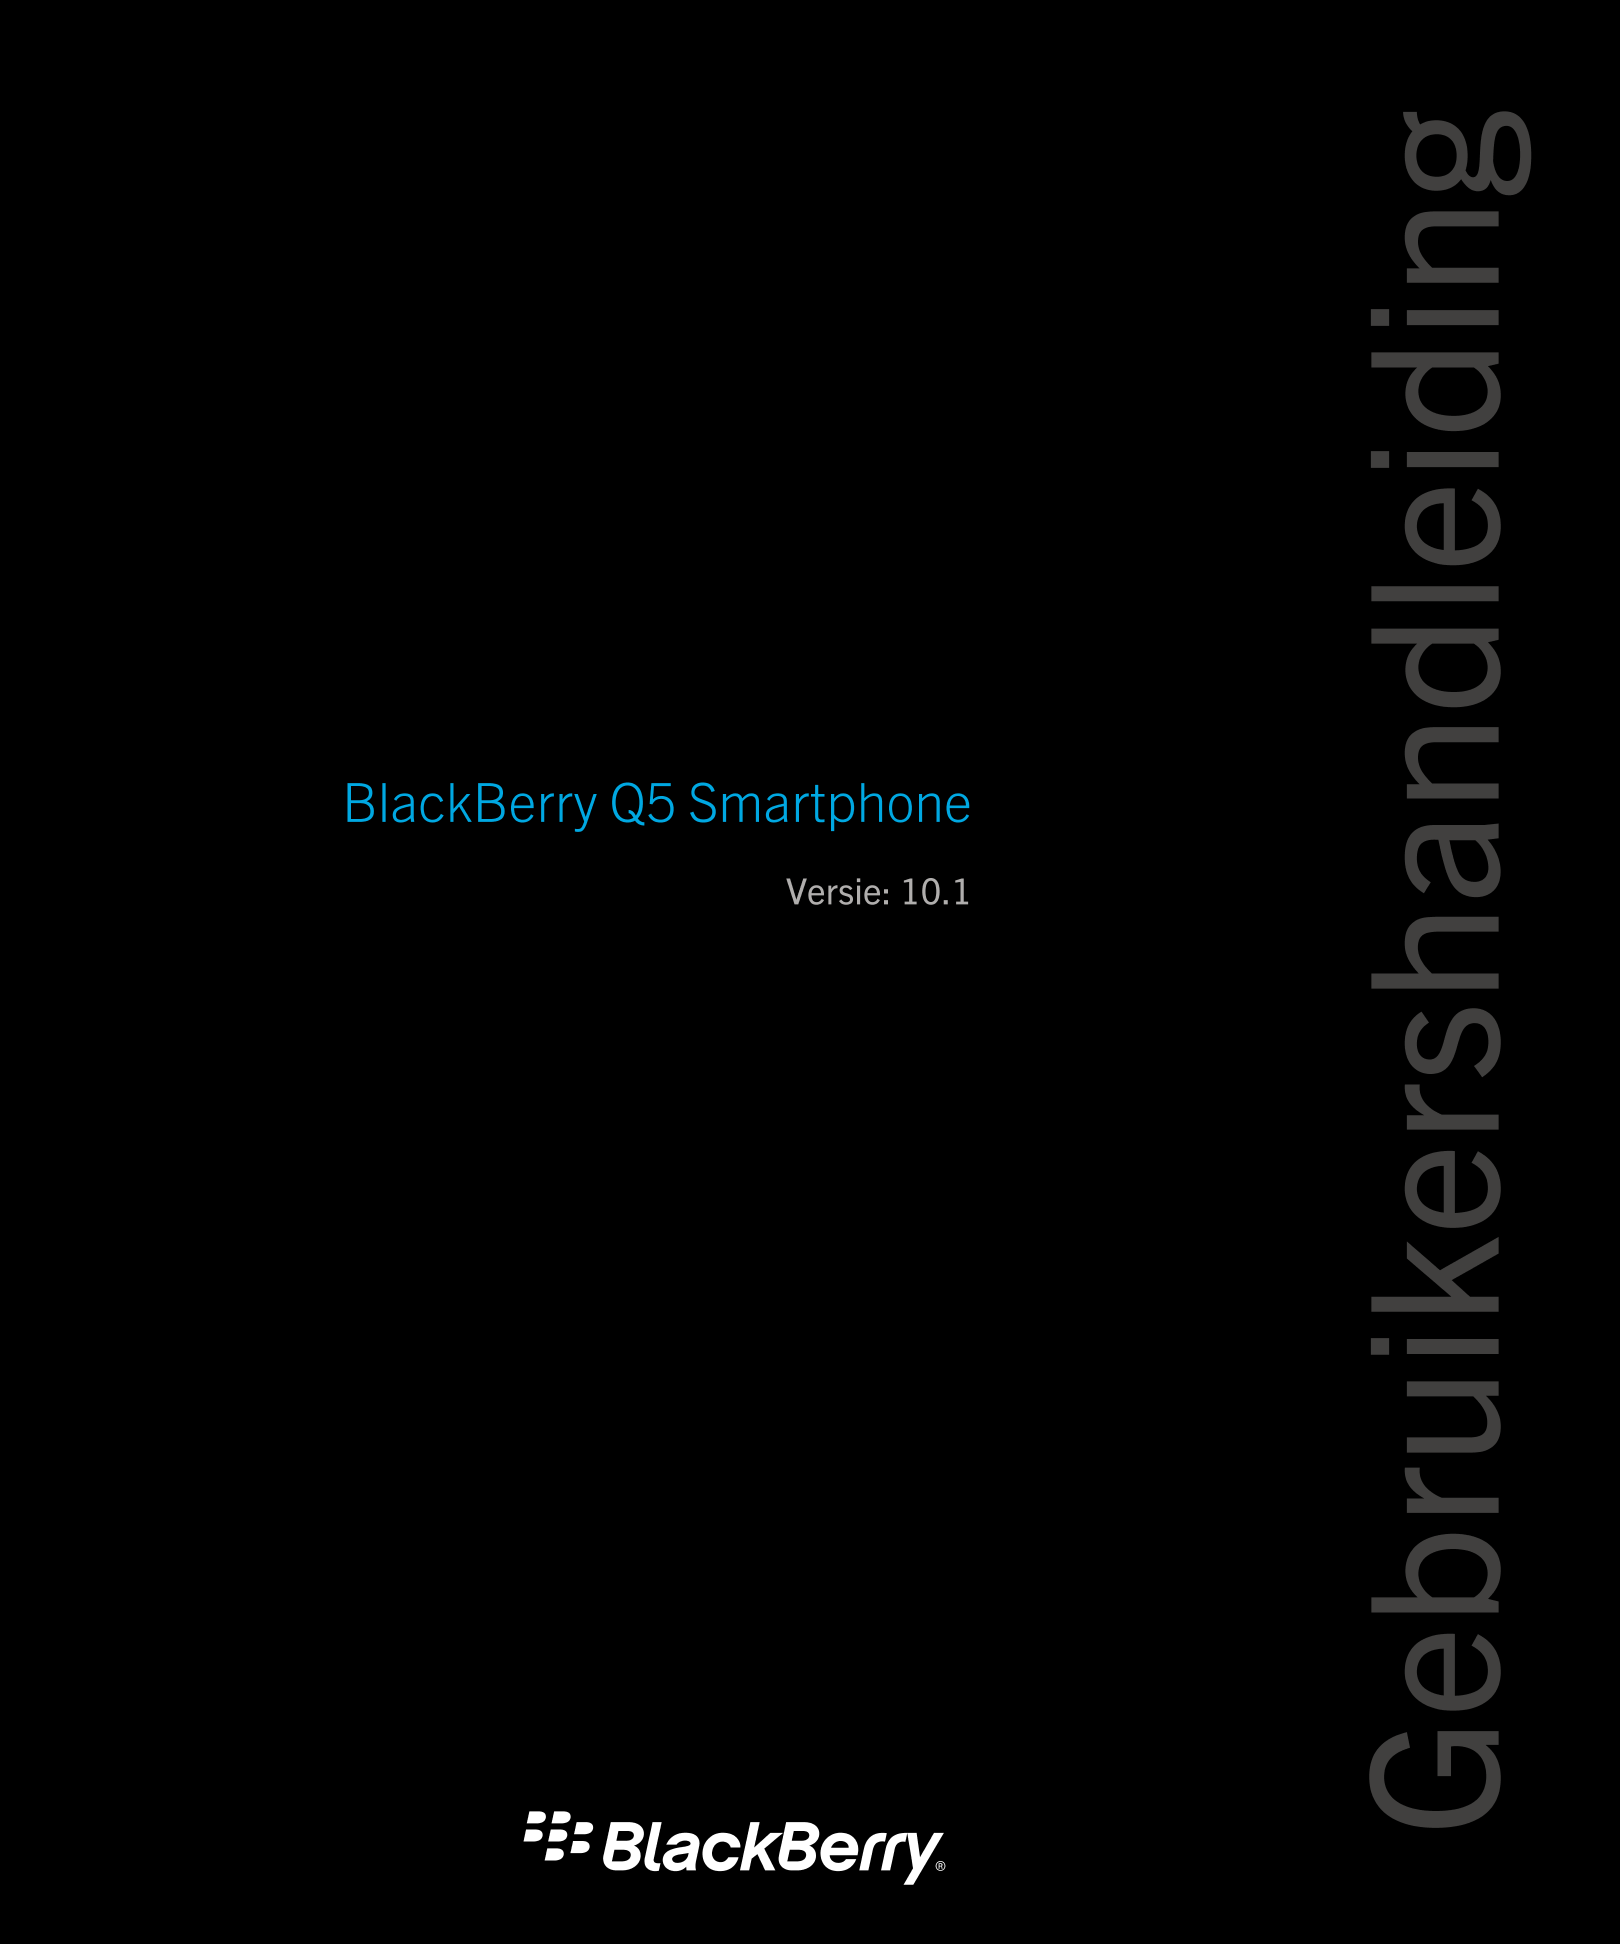 Gebruikershandleiding
BlackBerry Q5 Smartphone
Versie: 10.1